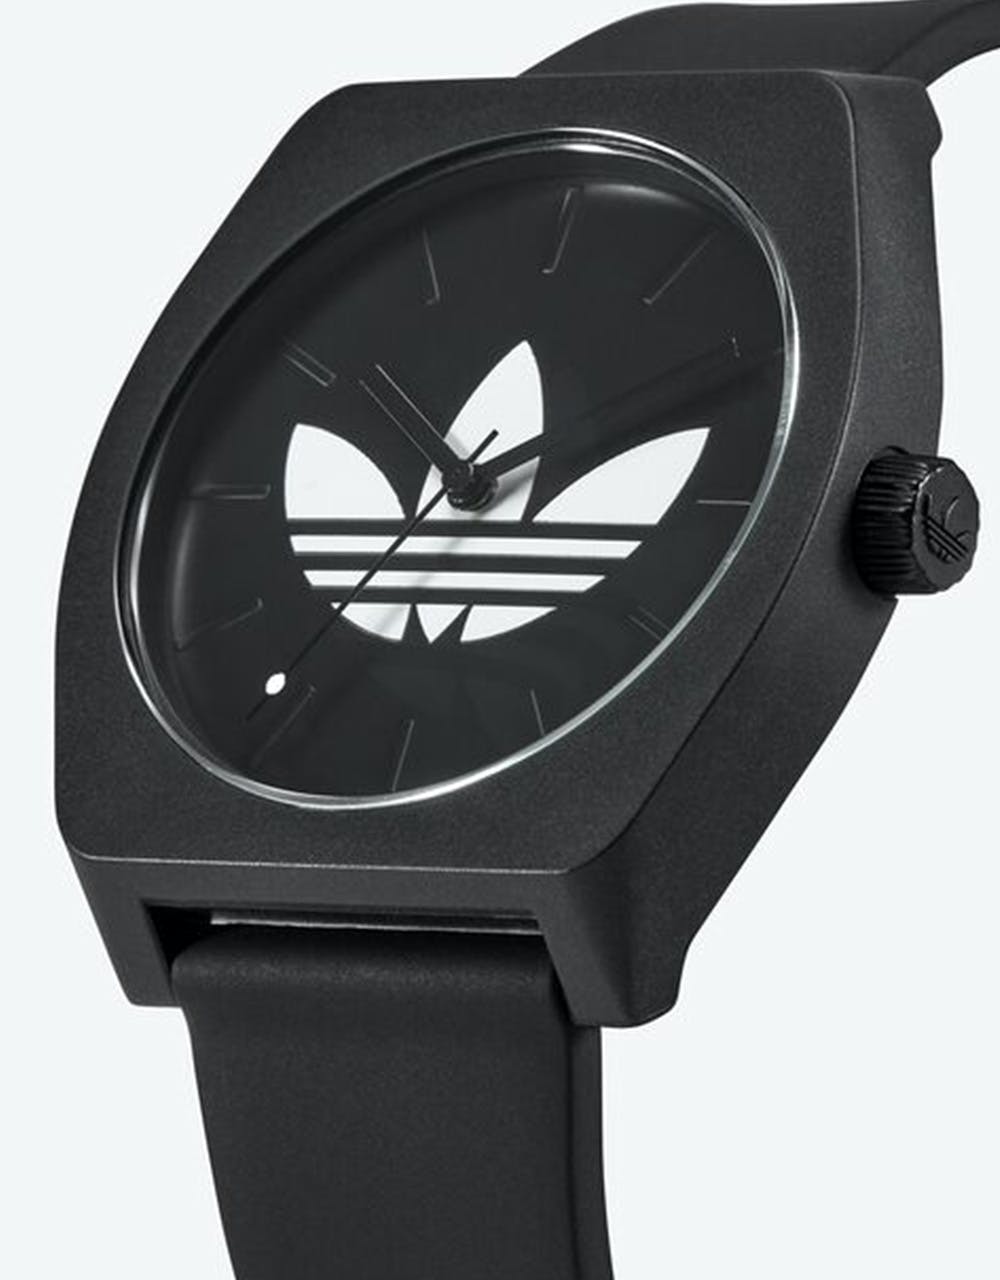 Adidas Process SP1 Watch - Trefoil/Black